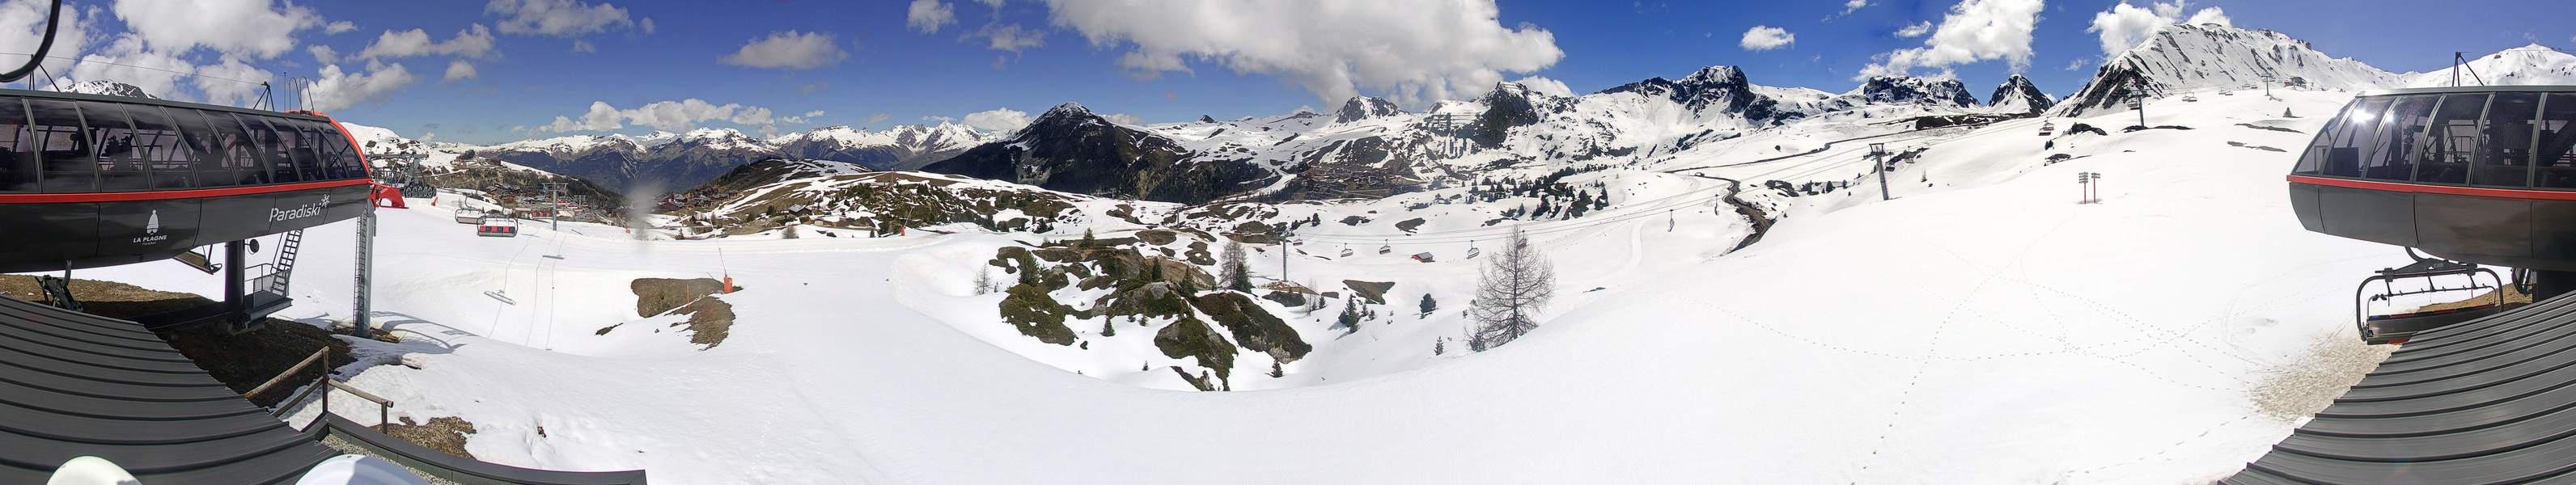 La Plagne webcam - ski station La Bergerie